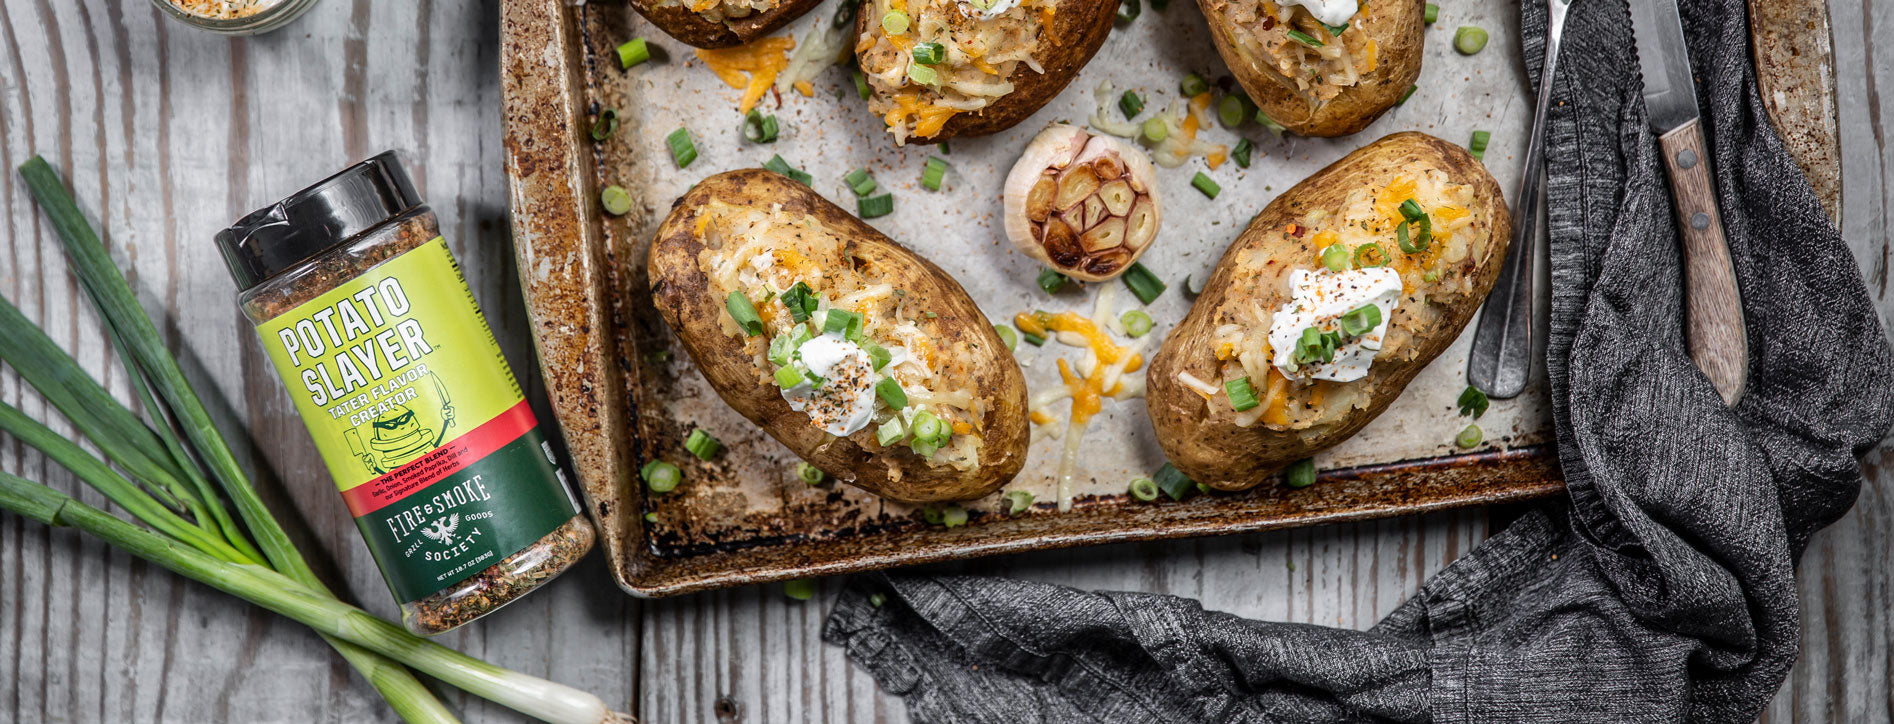 Potato Slayer! @Fire & Smoke Society 🤘🏻🤘🏻 #homecooks #foodpicofth